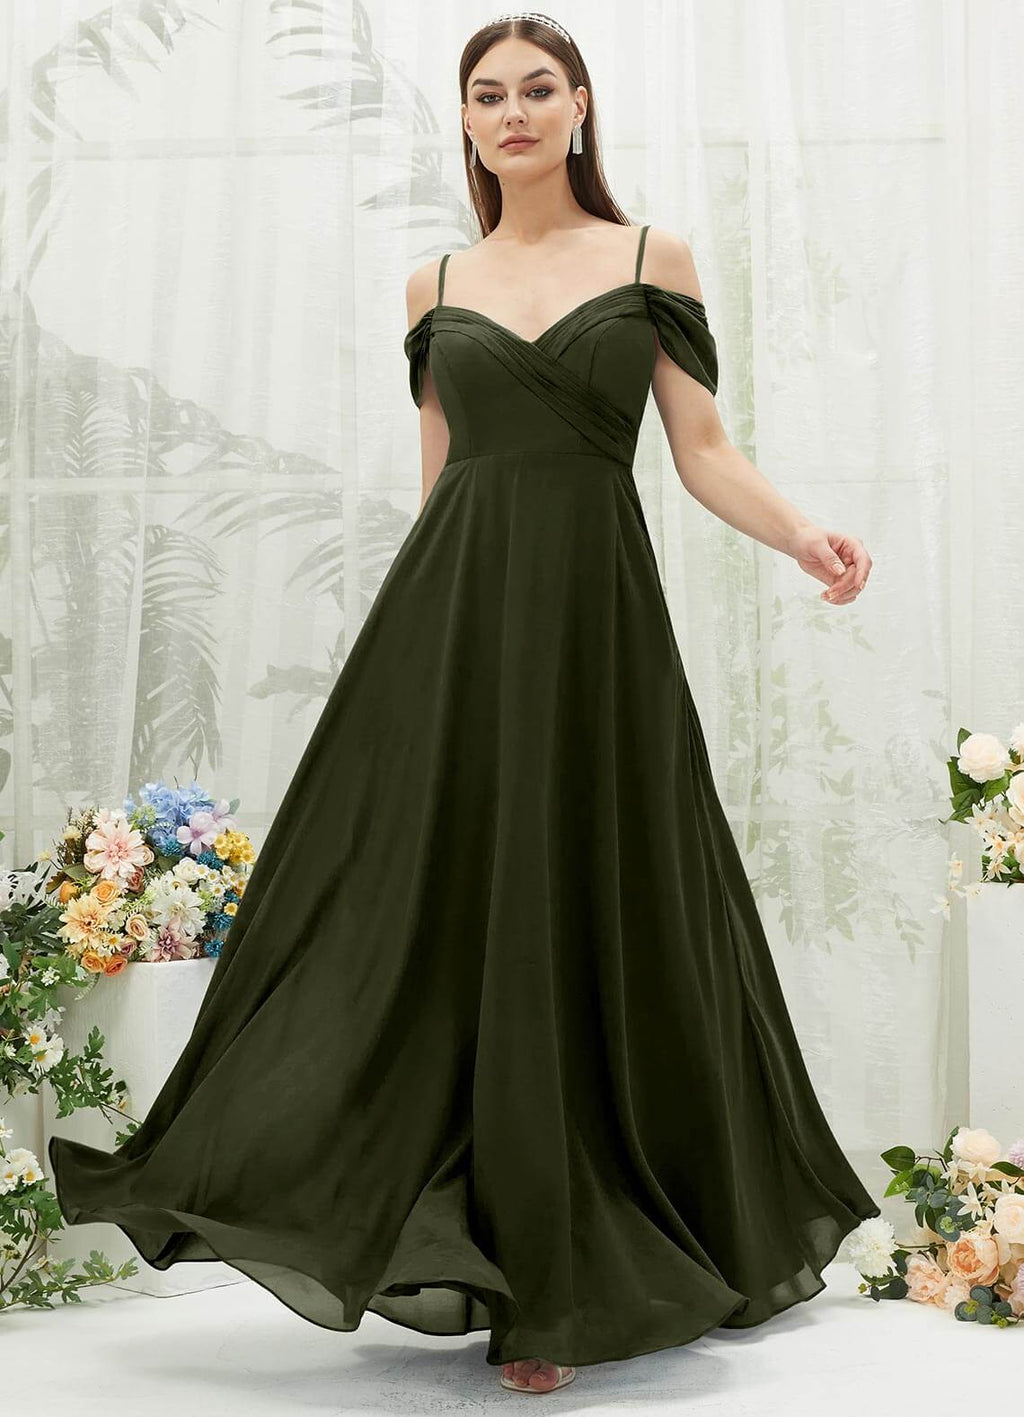 NZ Bridal Olive 3 in 1 convertible Chiffon Floor Length Bridesmaid Dress BG30217 Spence a